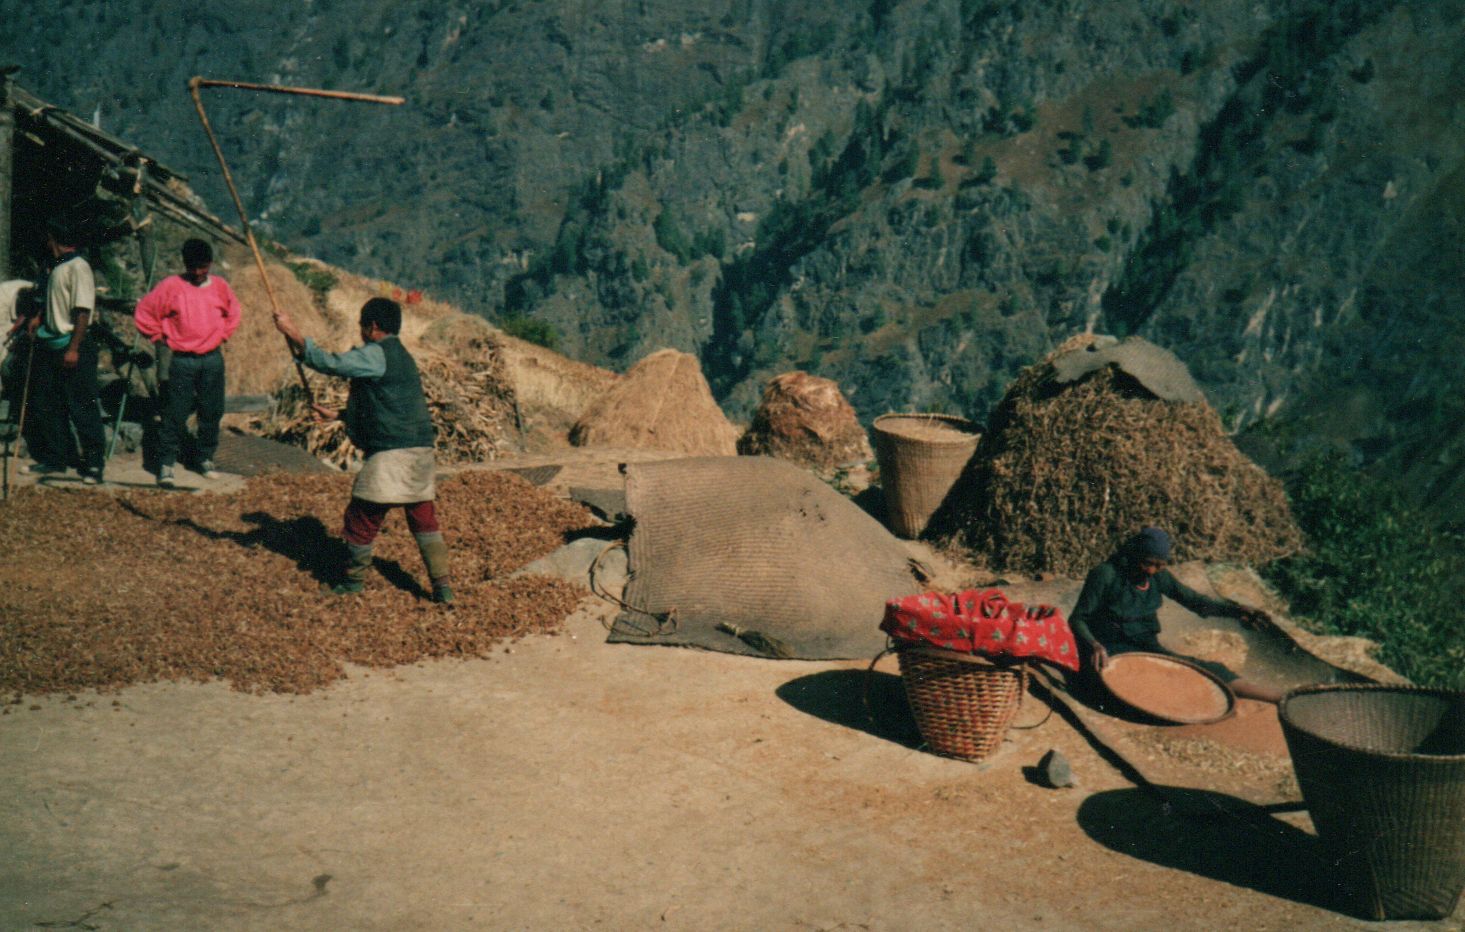 Thrashing Corn in Ngyak Village in the Buri Gandaki River Valley